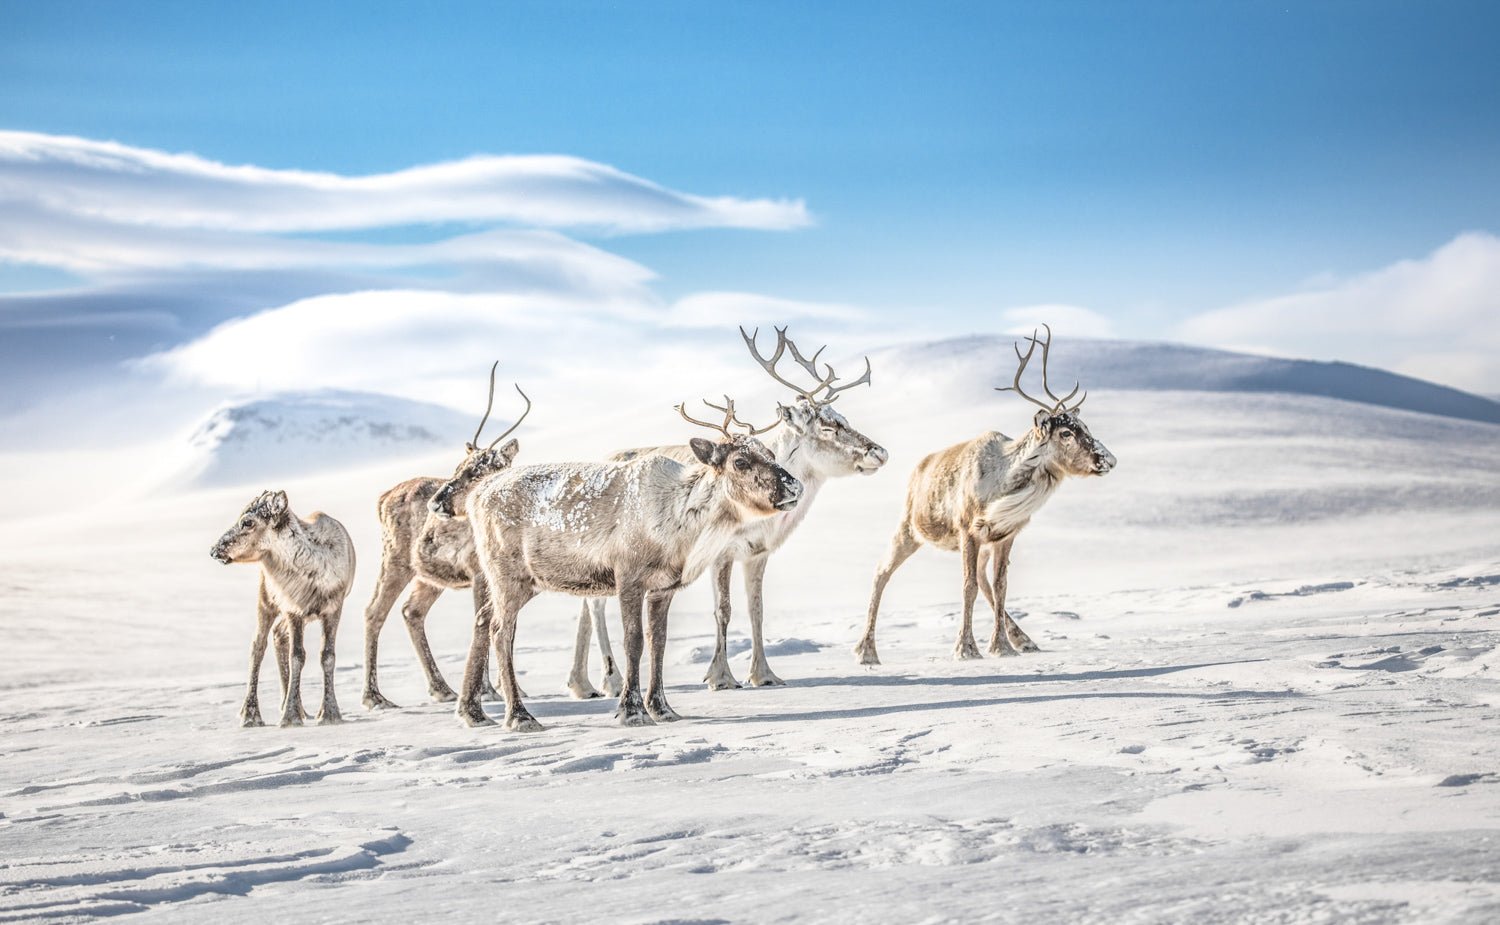 Reindeer in Arctic highlands, basking in winter sun, snowdrifts, fells in backdrop.